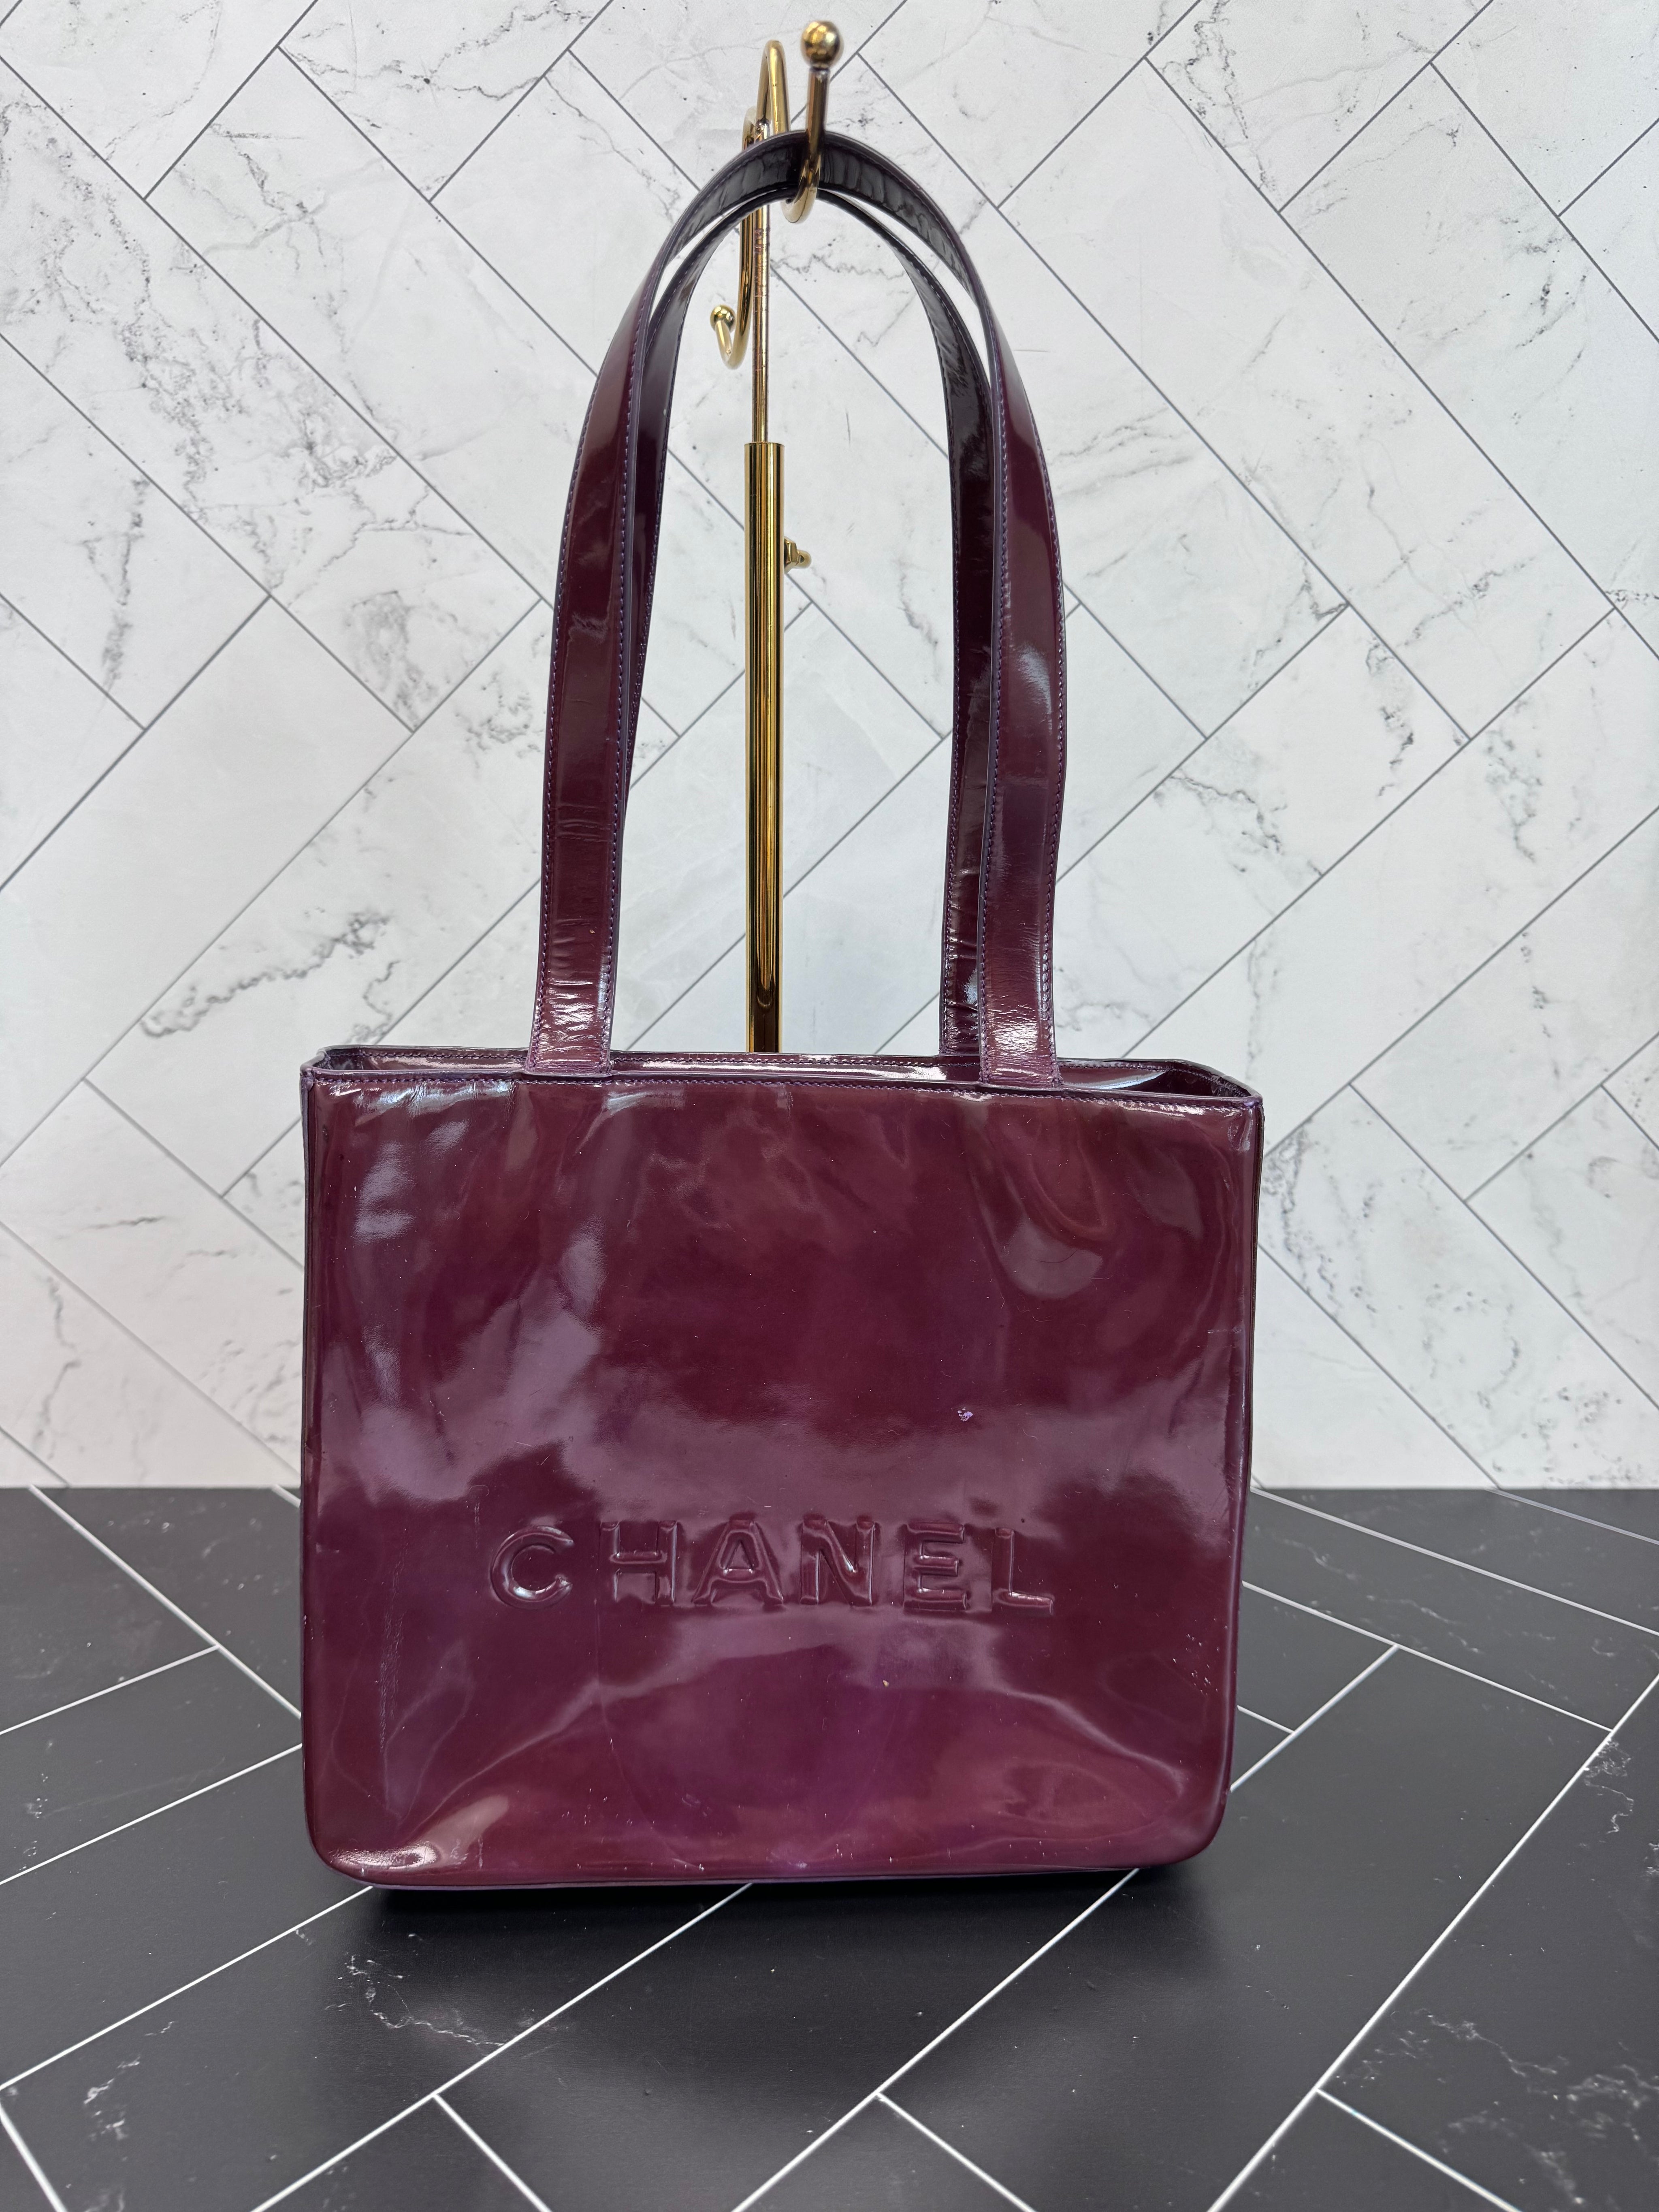 Chanel Plum Patent Leather Shoulder Bag